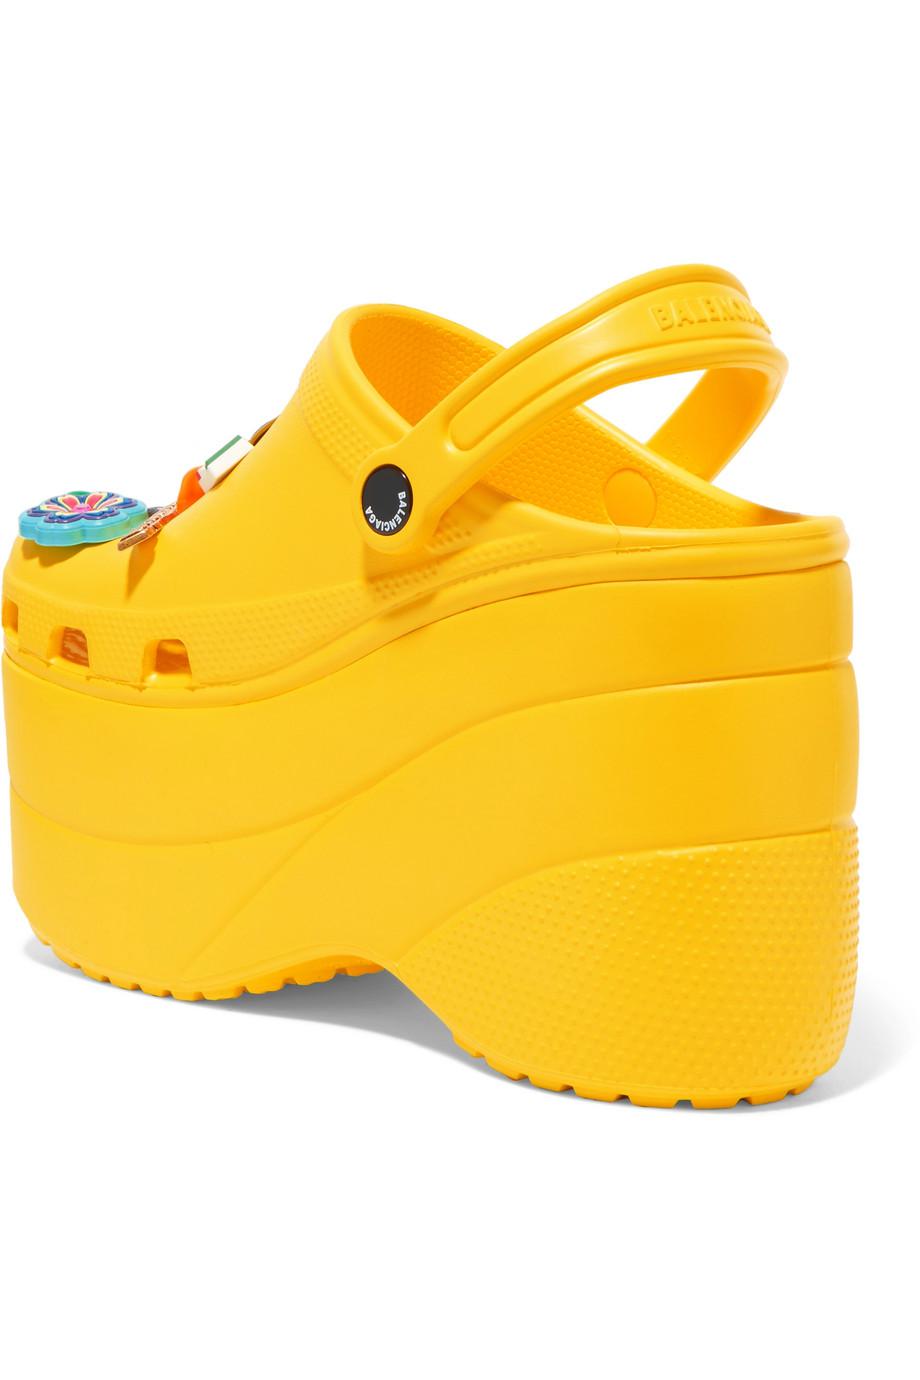 Balenciaga + Crocs Embellished Rubber Platform Sandals in Yellow - Lyst